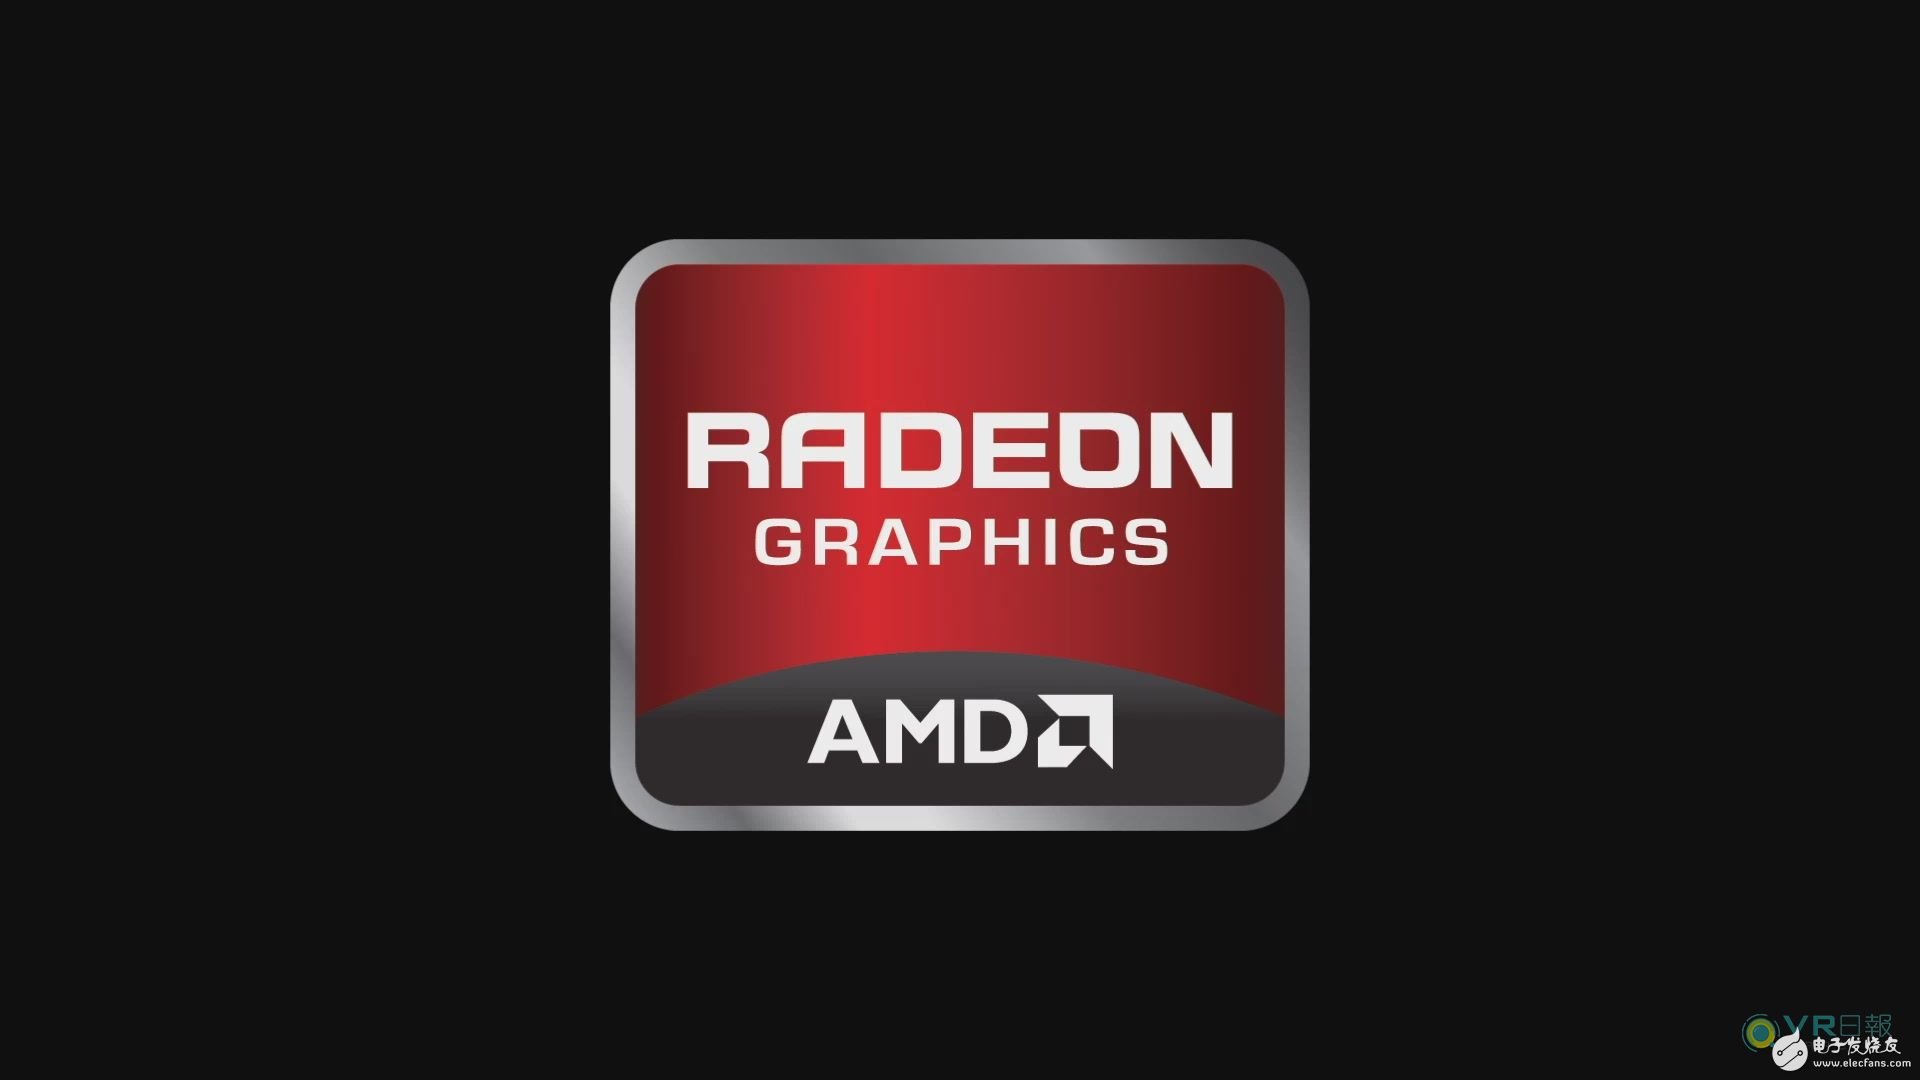 AMD RadeonRX490 new news: support VR, price or higher than GTX1080